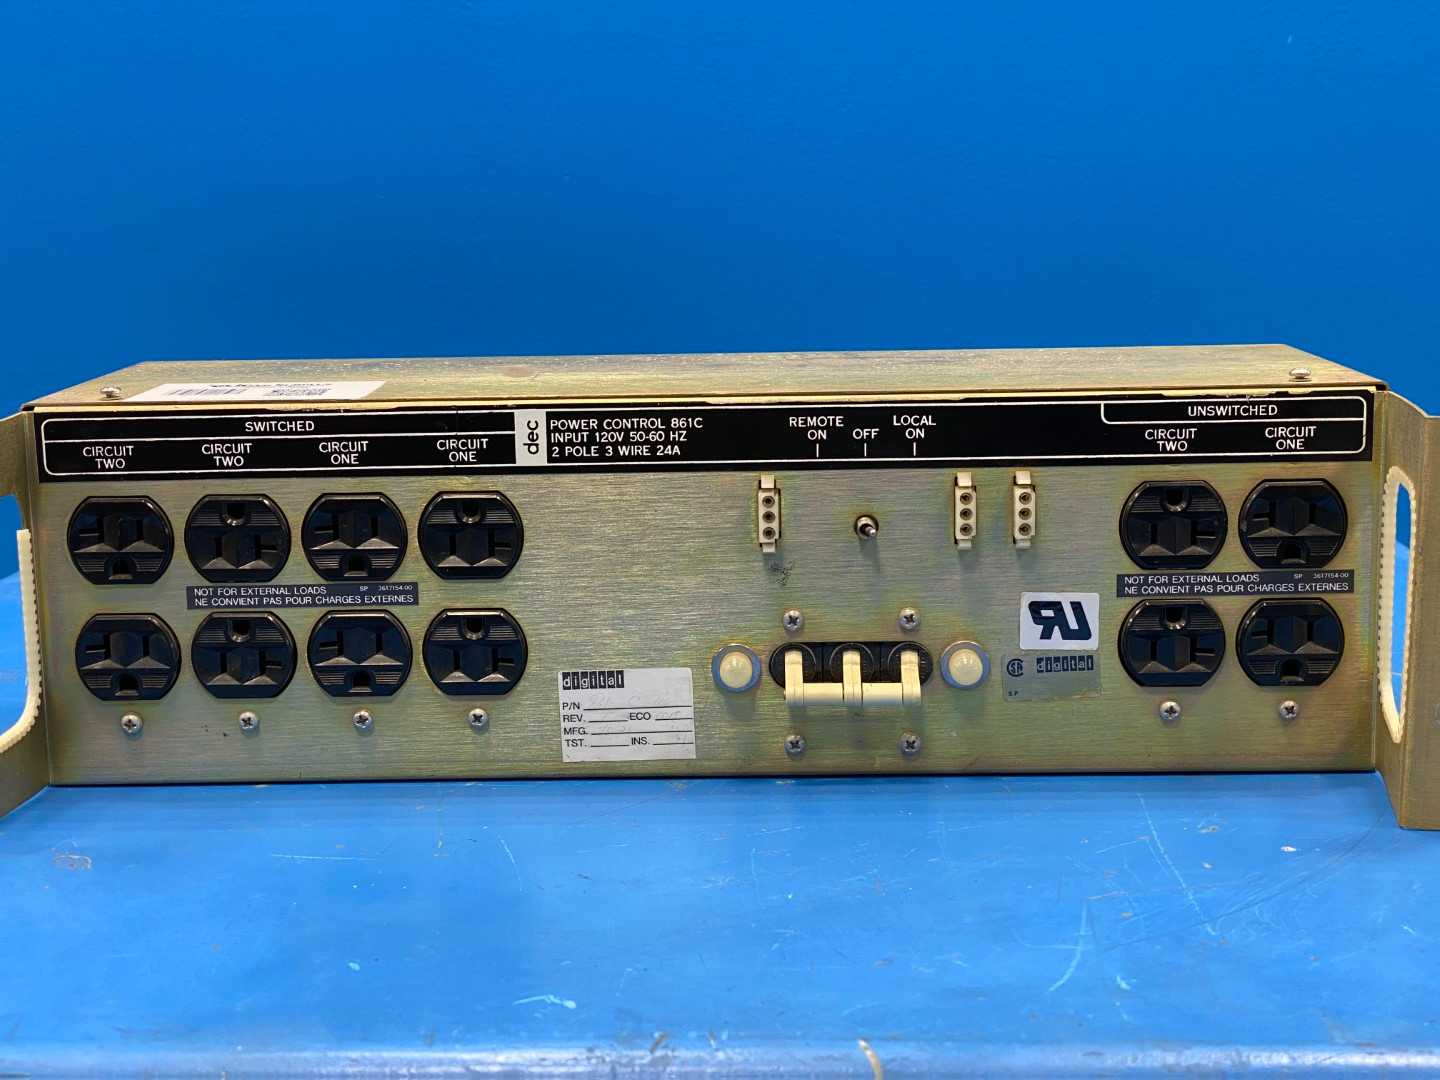 MARWAY MPD 861C 24A 120V 50-60Hz Rack Mount Power Distribution System